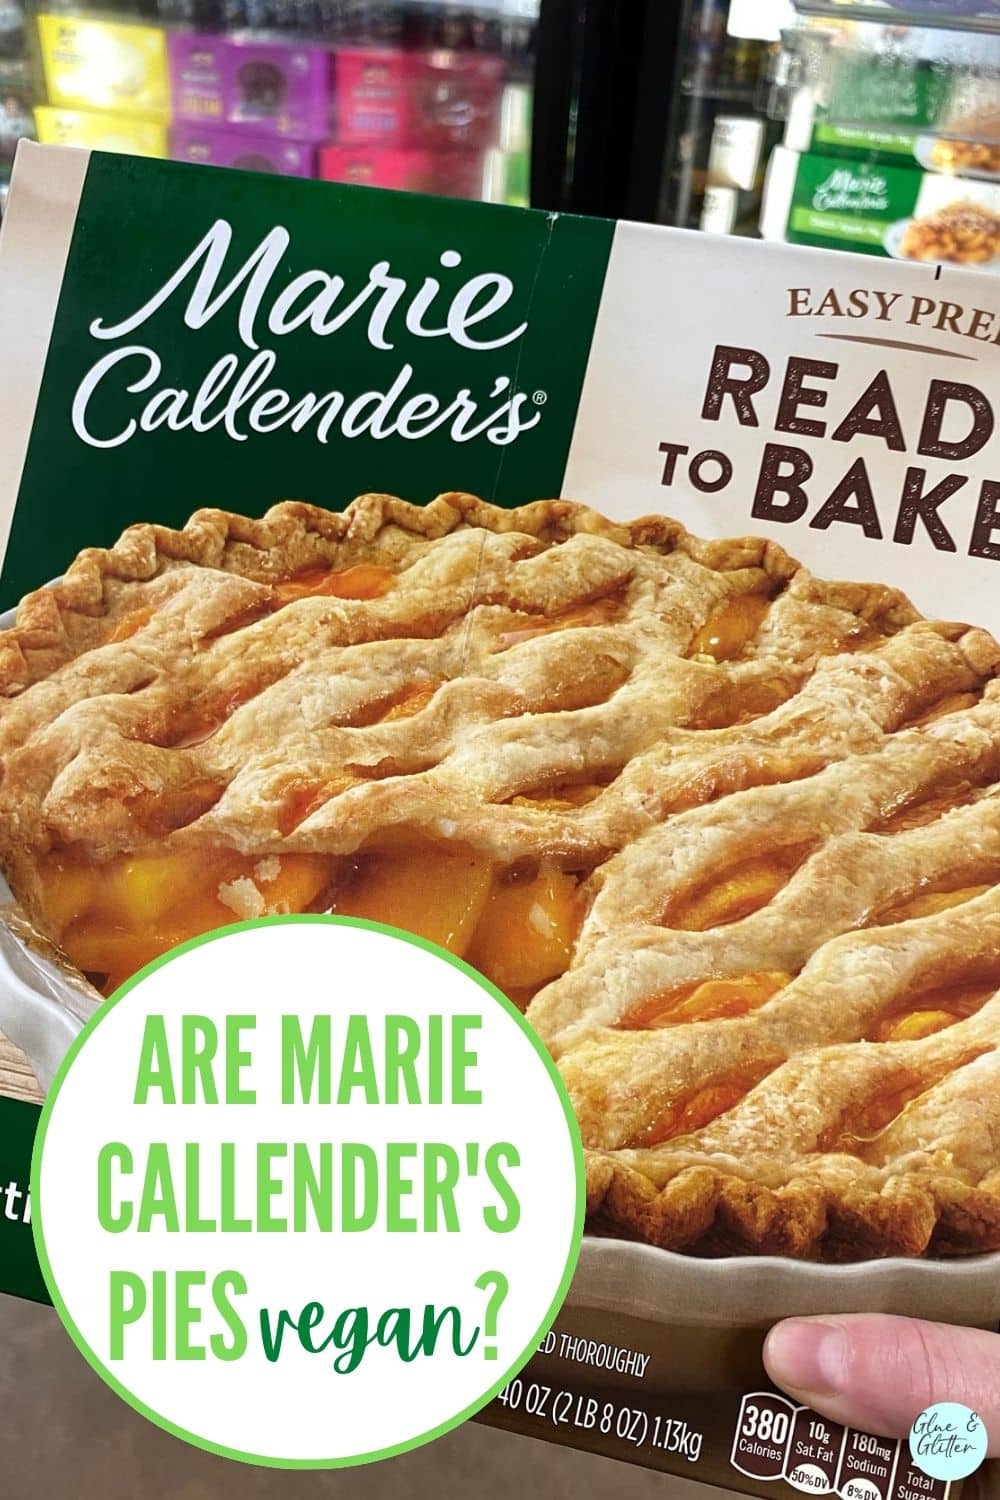 photo of Marie Callender's Peach Pie box text overlay reads, "Are Marie Callender's Pies vegan?"